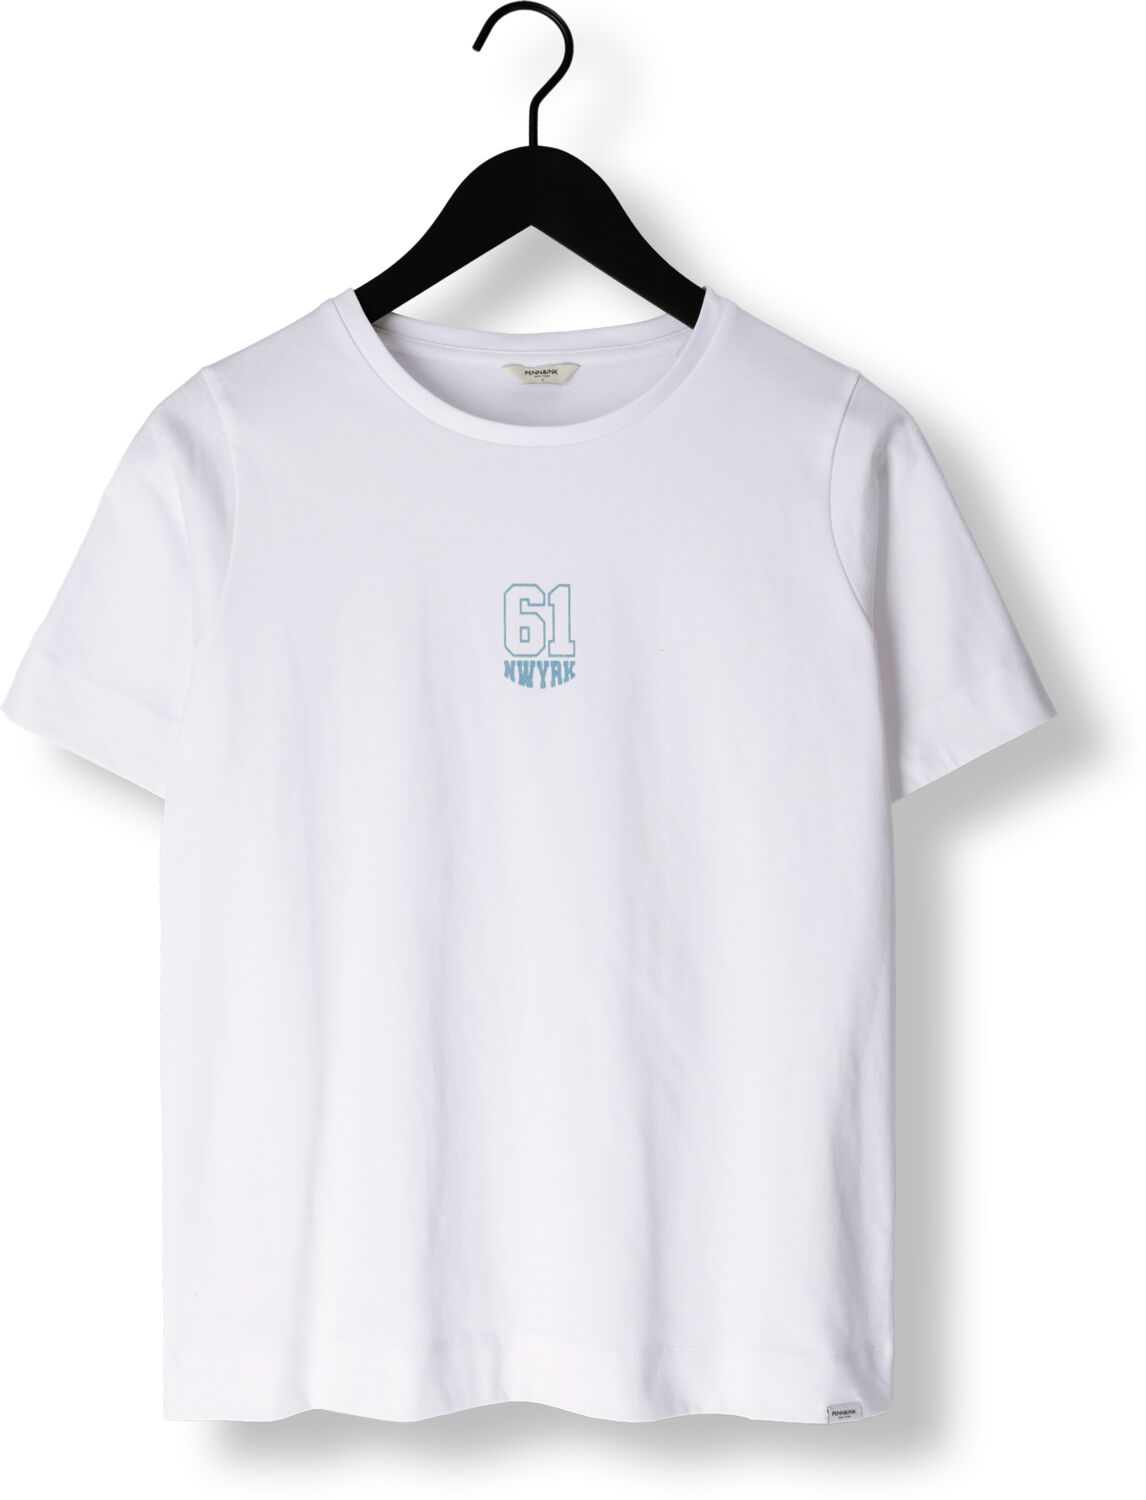 PENN & INK Dames Tops & T-shirts T-shirt Print Ecru